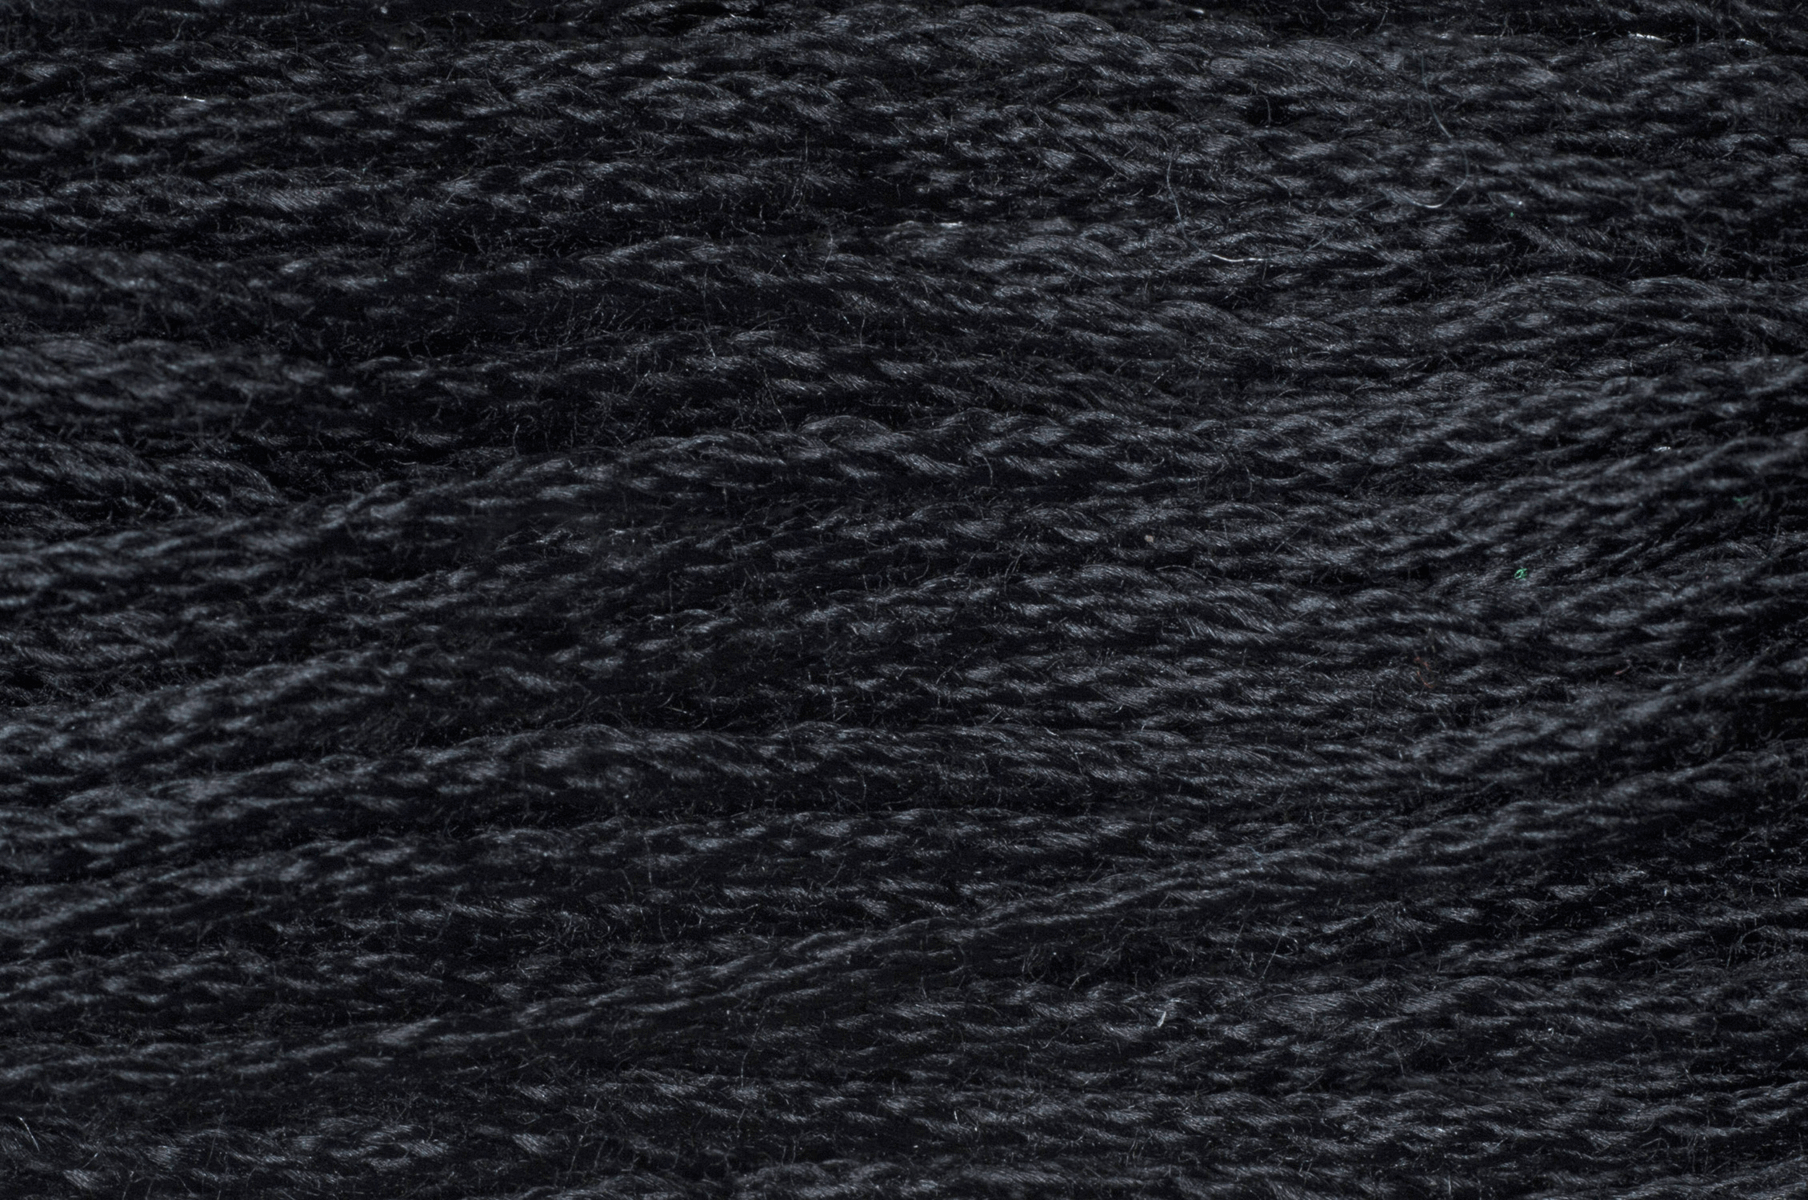 Trimits 100% Cotton Embroidery Floss - Black